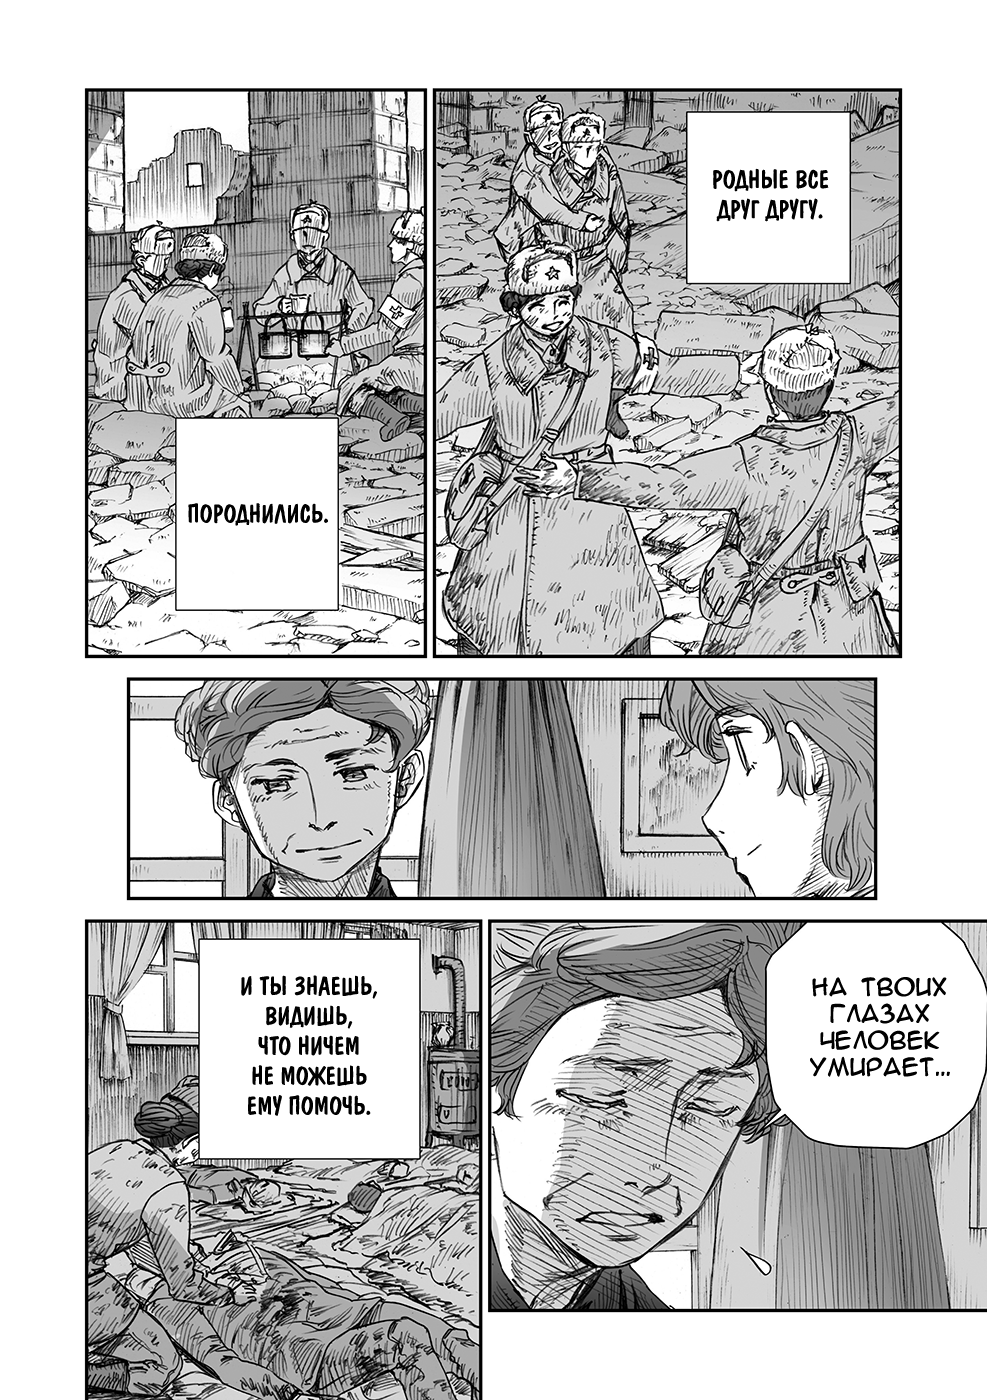 War has no woman's face #24: Nurse in Stalingrad - Comics, Manga, Partisans, The Great Patriotic War, Memoirs, Longpost, Svetlana Alexievich, Stalingrad